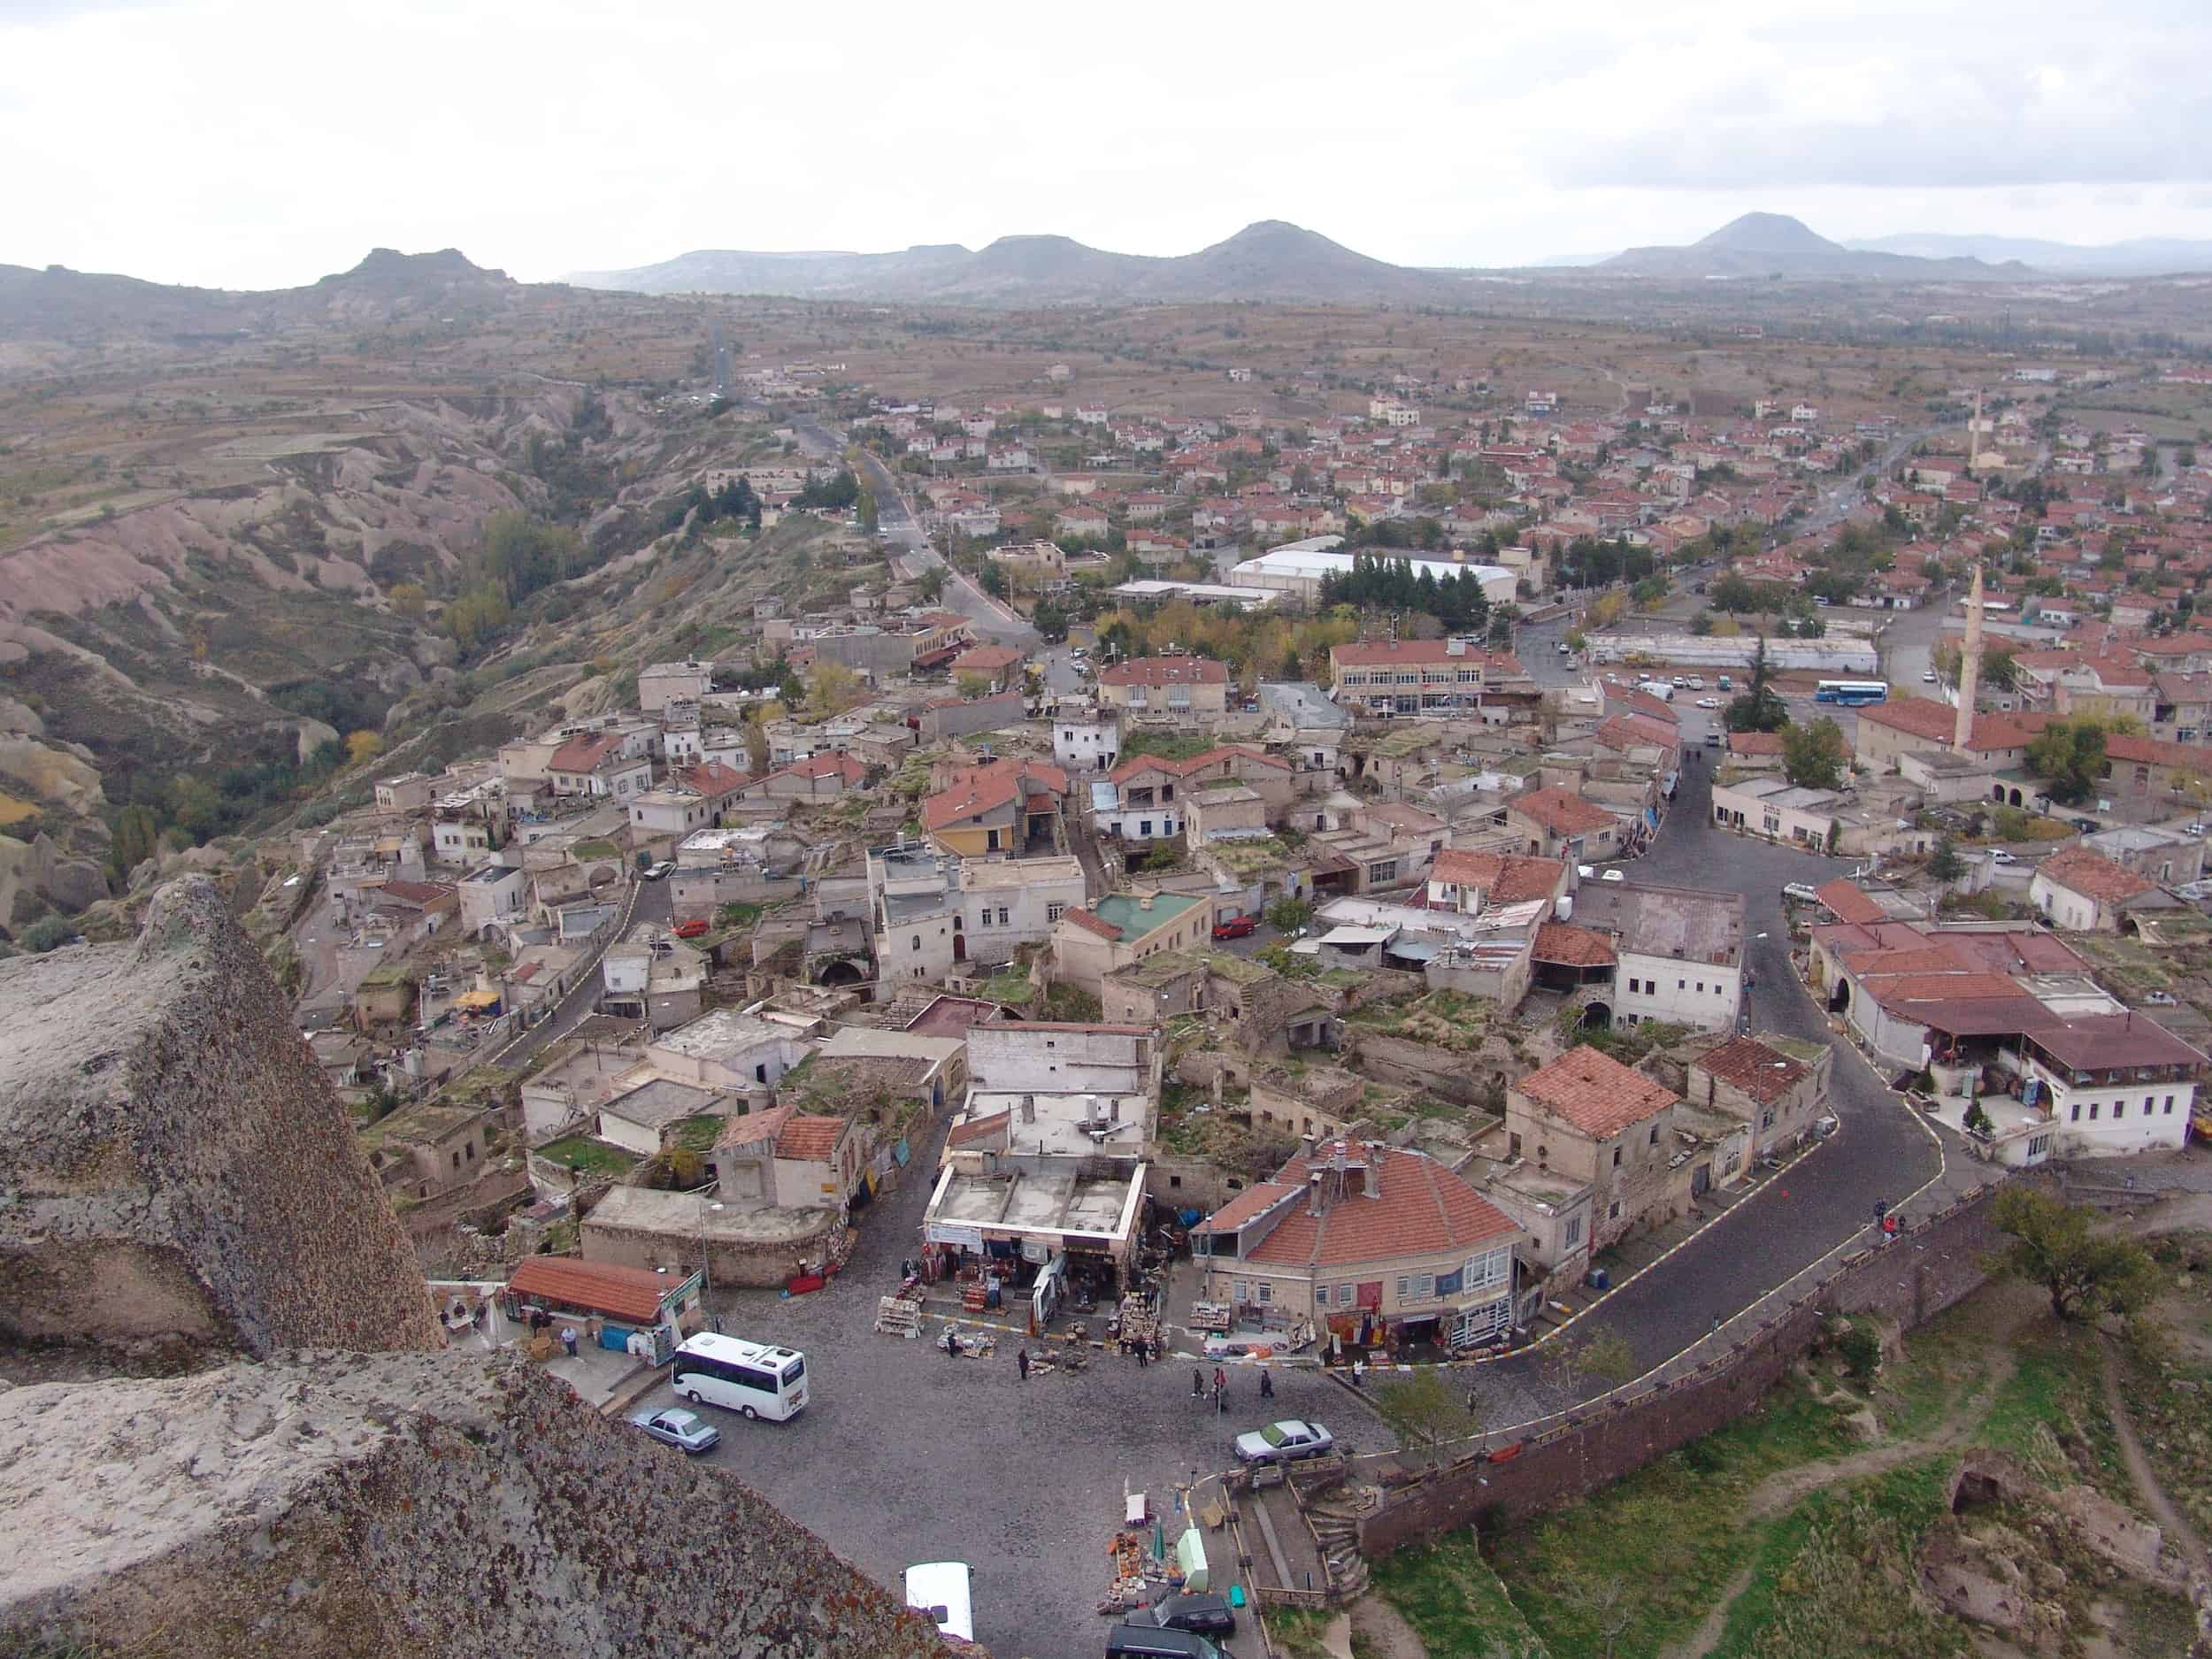 View of the town of Üçhisar at Üçhisar Castle in Cappadocia, Turkey